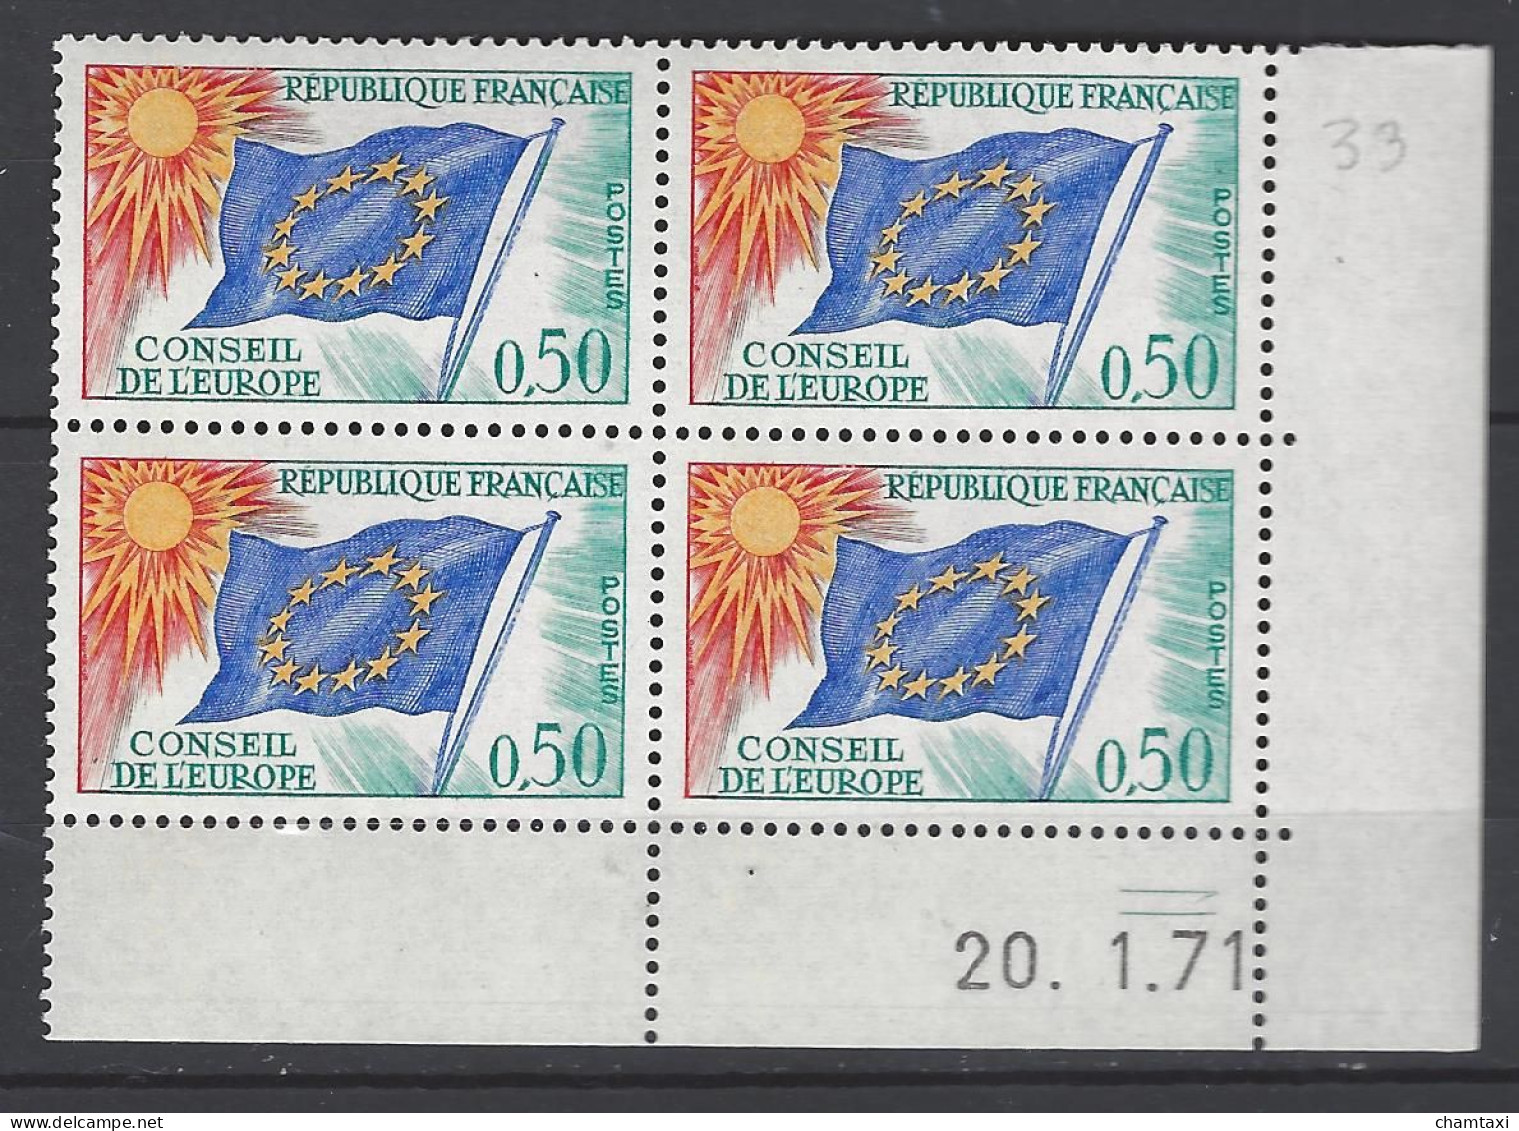 CD 33 FRANCE 1971 TIMBRE SERVICE CONSEIL DE L EUROPE DRAPEAU TYPE 1958 1959  COIN DATE 33 : 20 / 1 / 71 - Dienstmarken